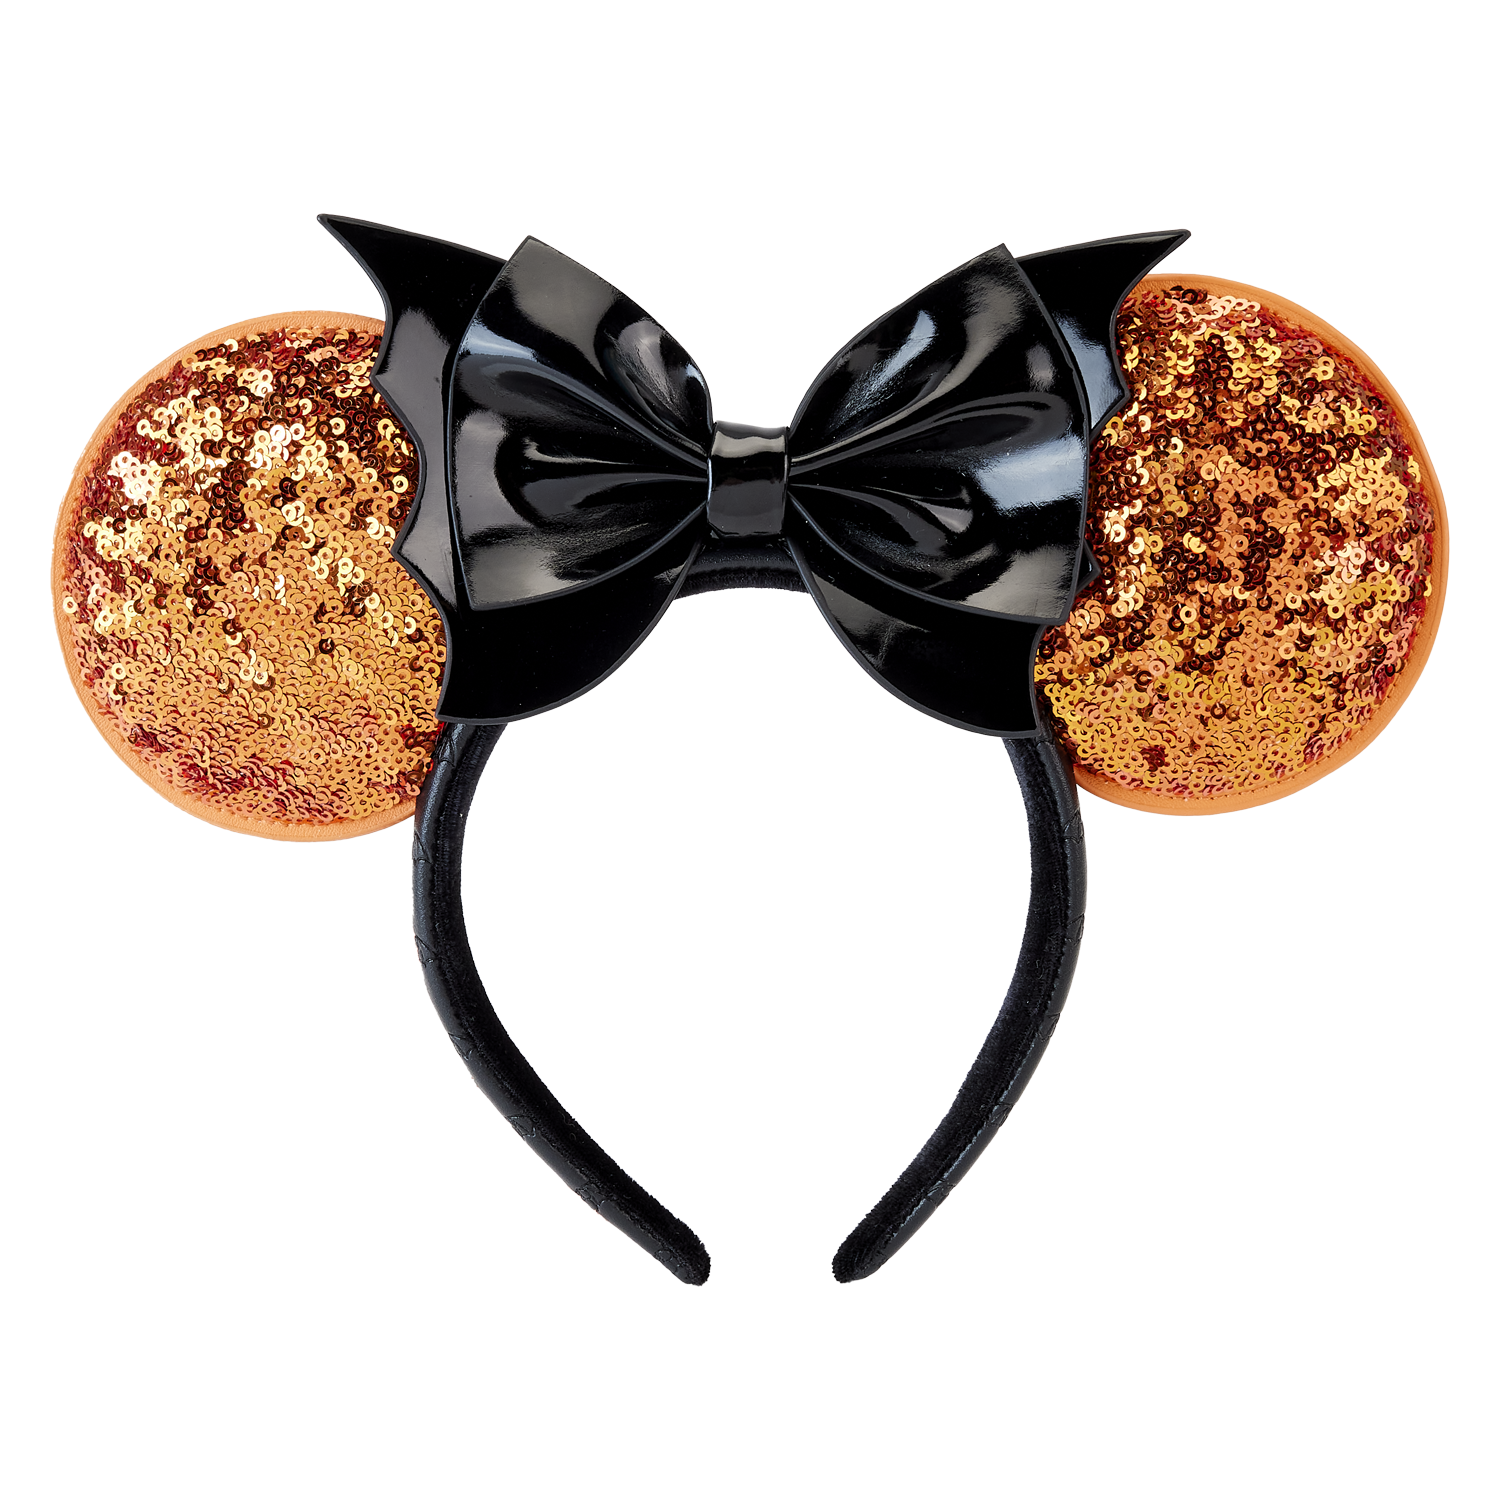 Loungefly Disney Mickey & Minnie Mouse Love Ears Headband